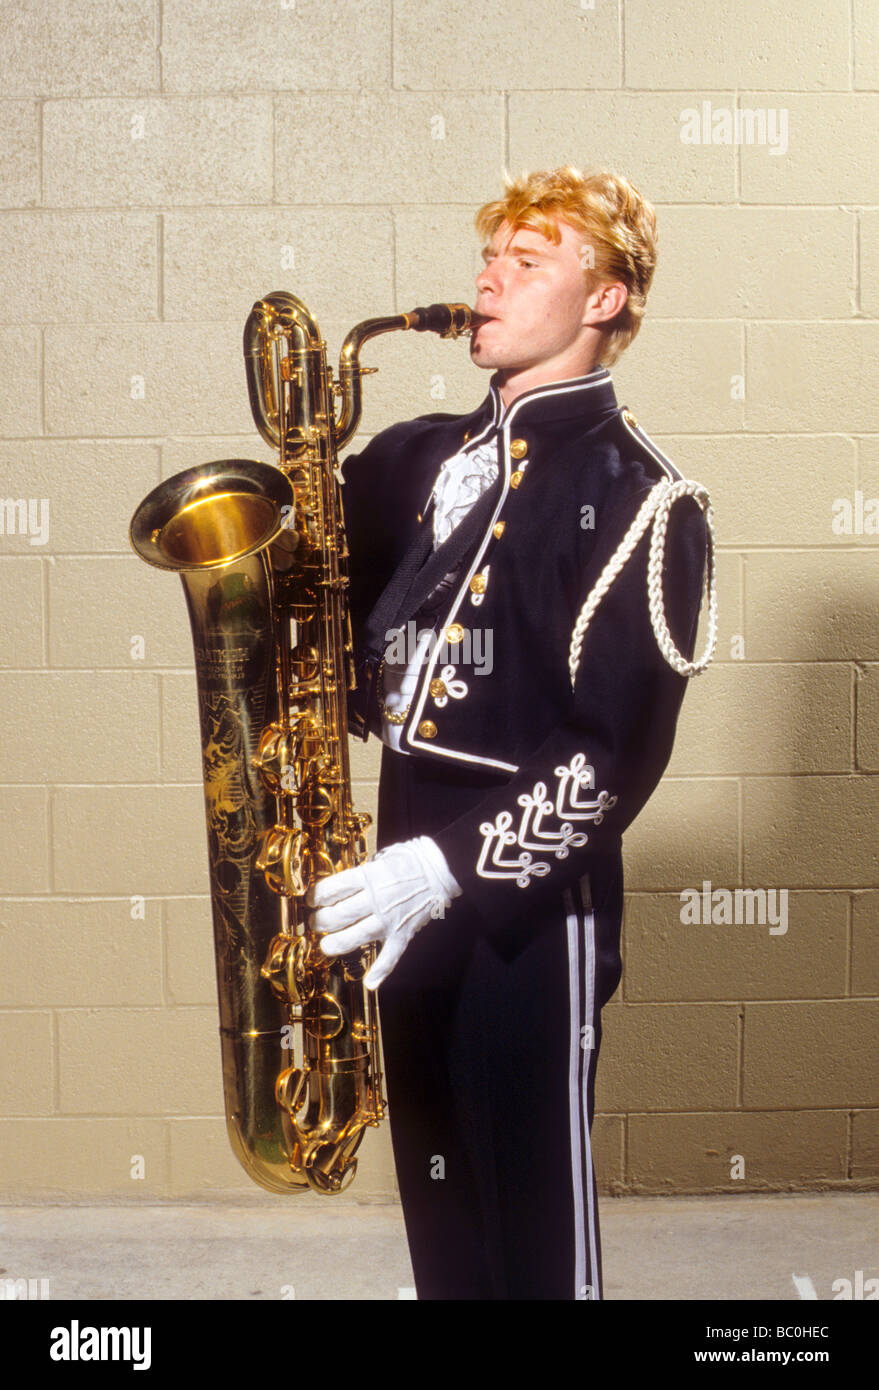 high school band music instrument play baritone sax Stock Photo - Alamy